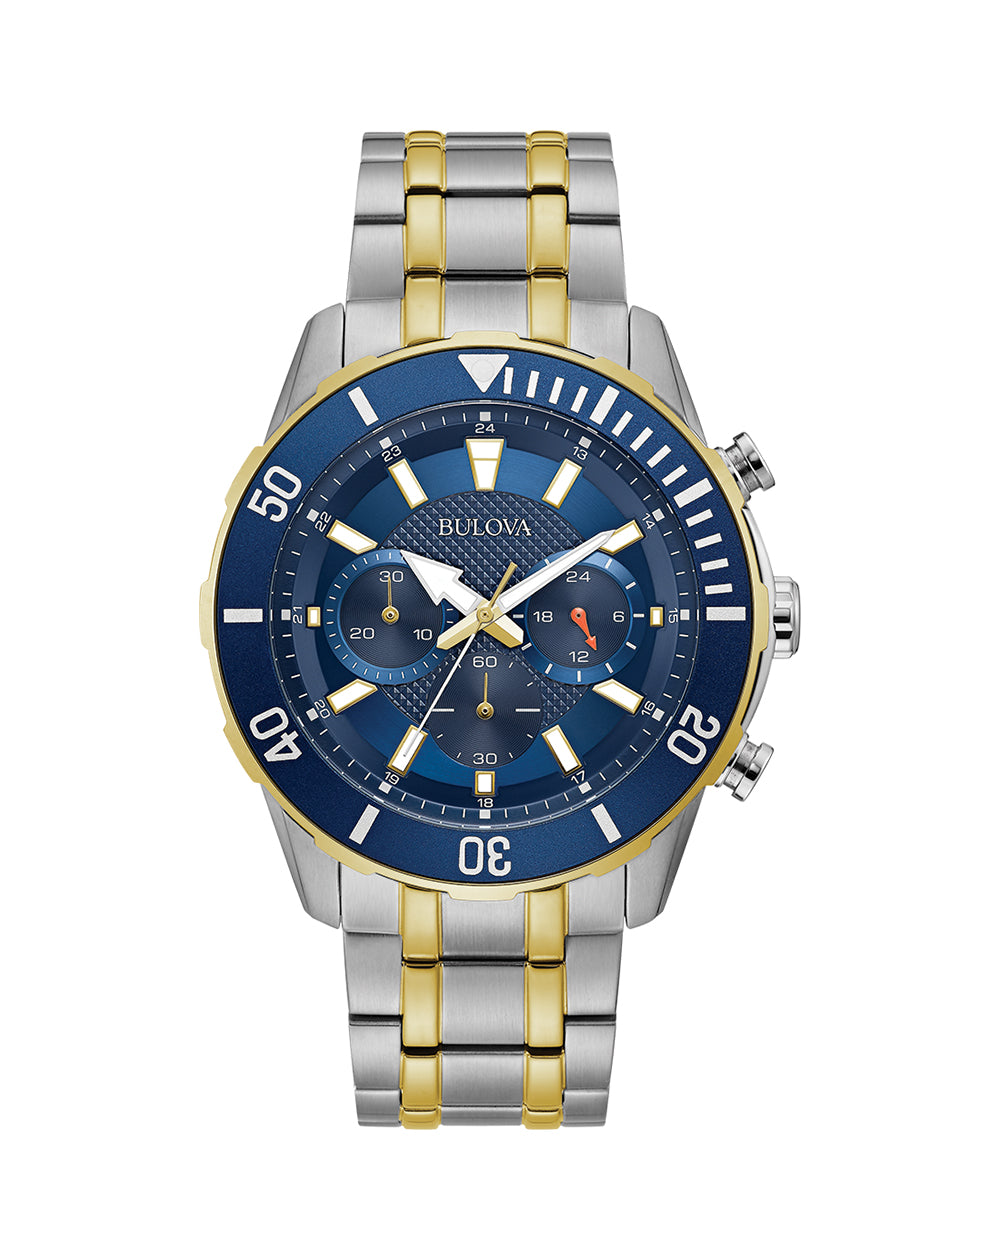 98A246 Bulova Men's Classic Chronograph Watch